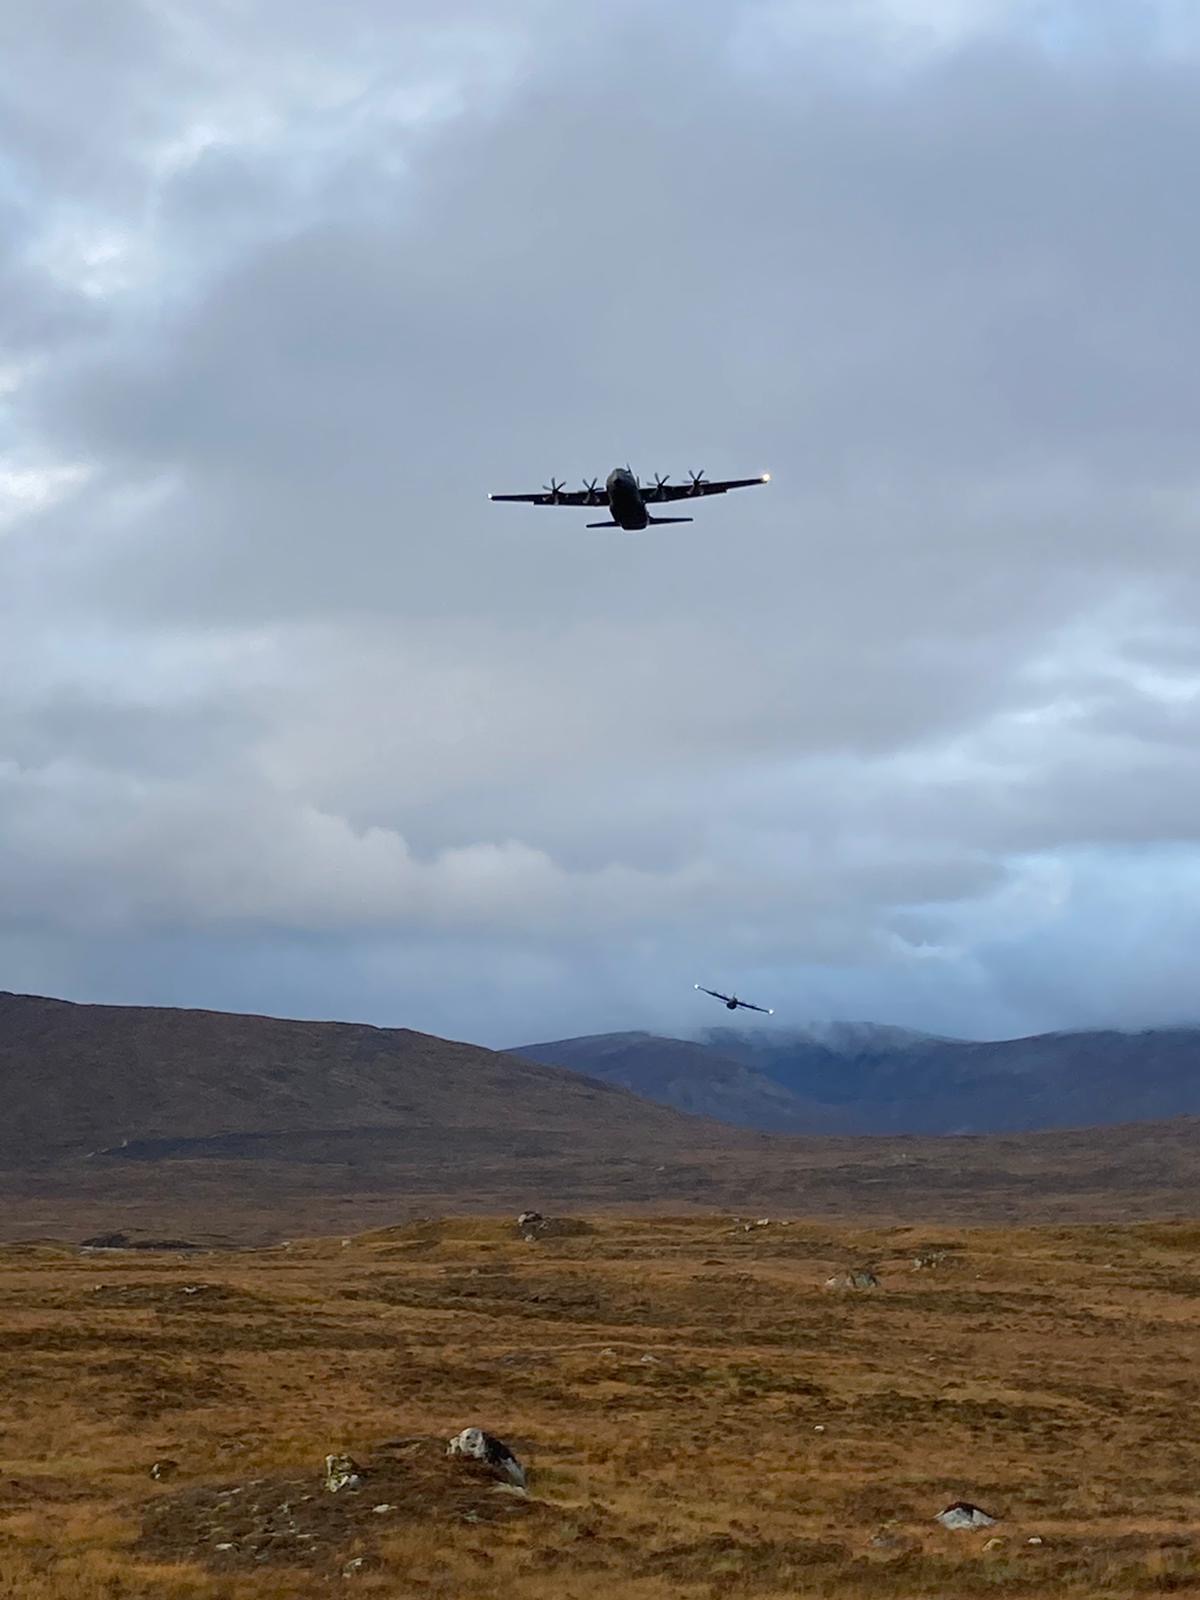 As part of Exercise Tartan Spirit, two C-130J Hercules conduct formation flying training through the mountainous terrain